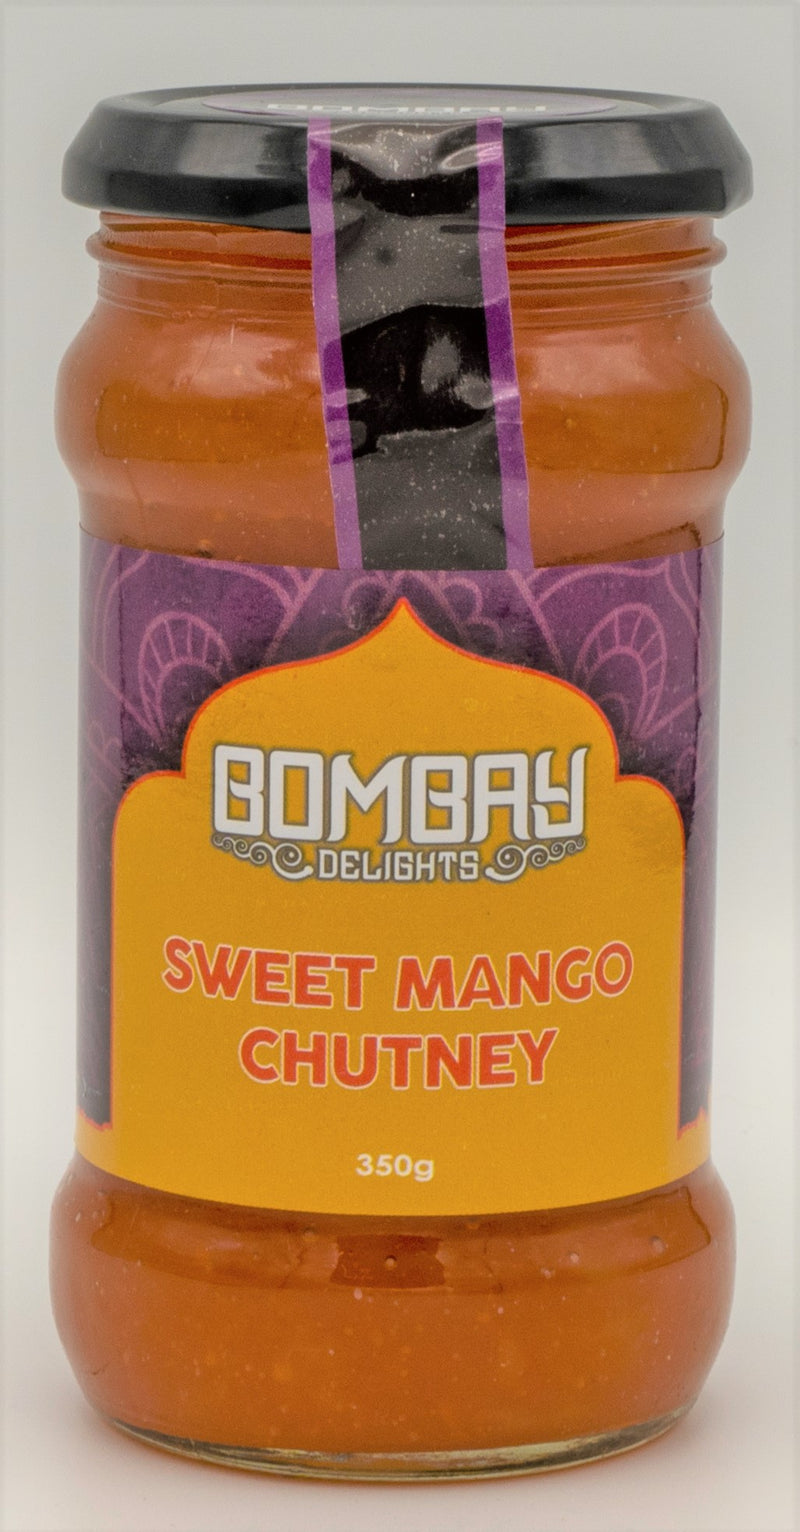 Bombay Delights Chutney Sweet Mango 350g